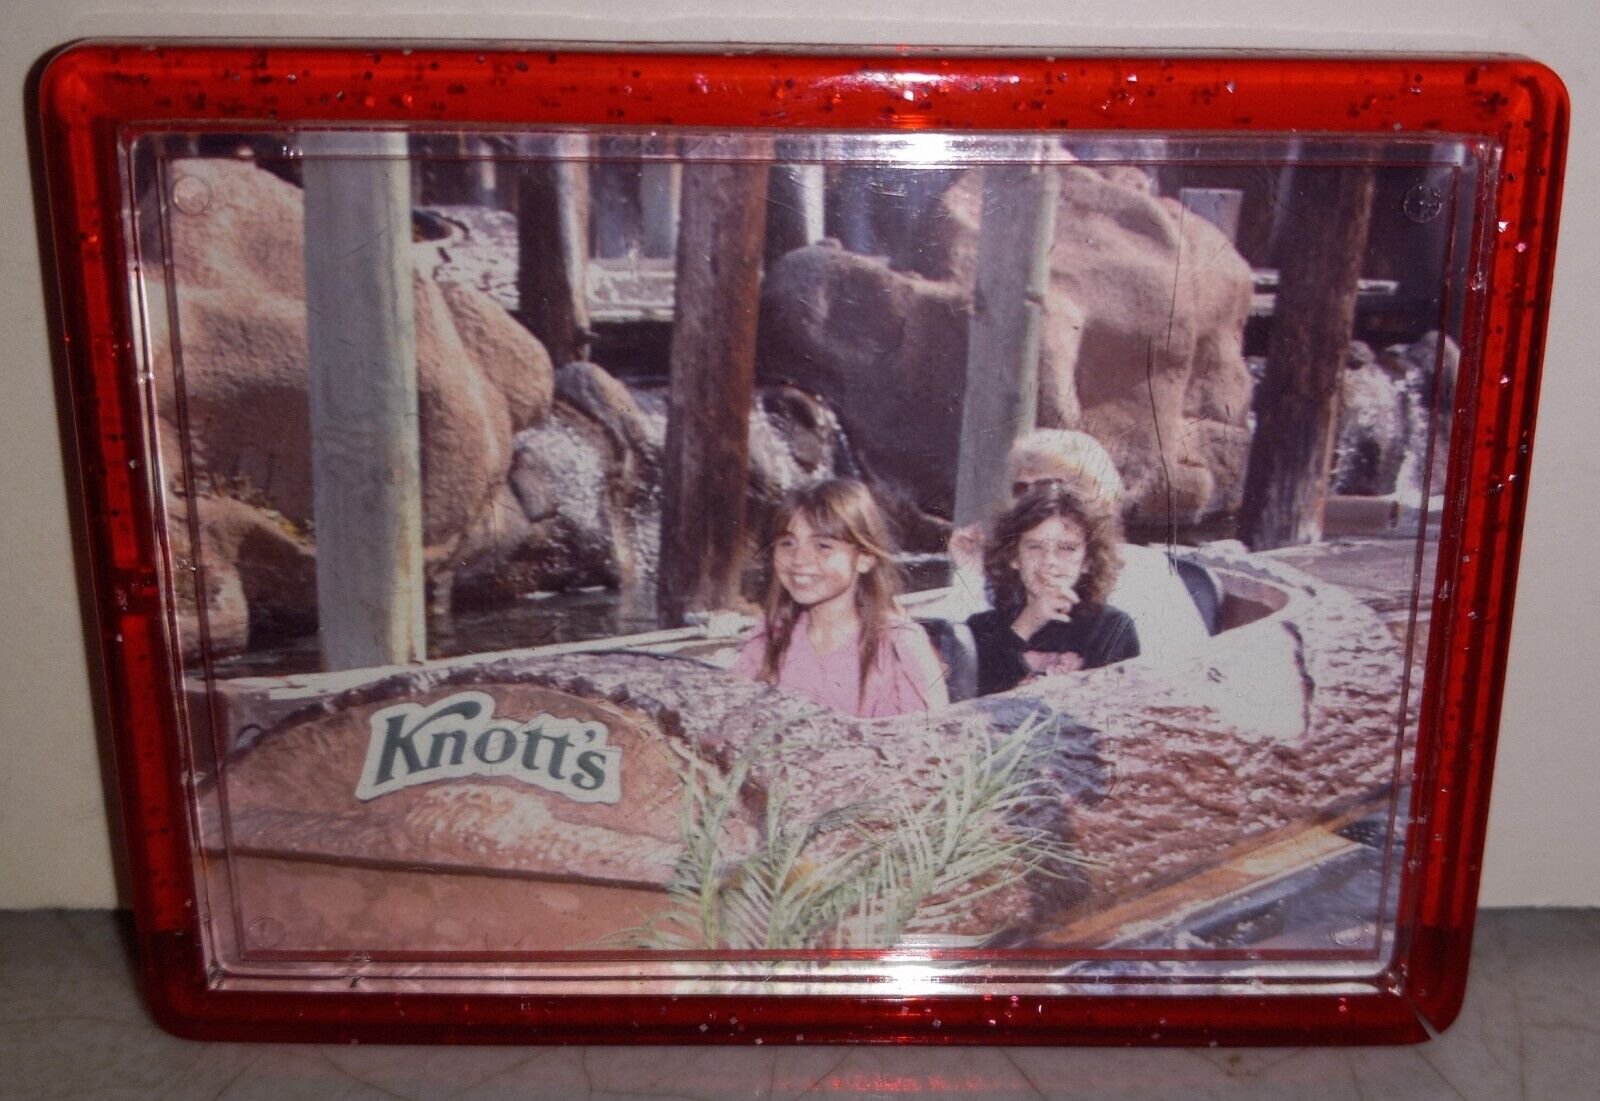 Knott’s Berry Farm Log Ride Photo & Magnet Frame - Cracked Frame & Broken Stand